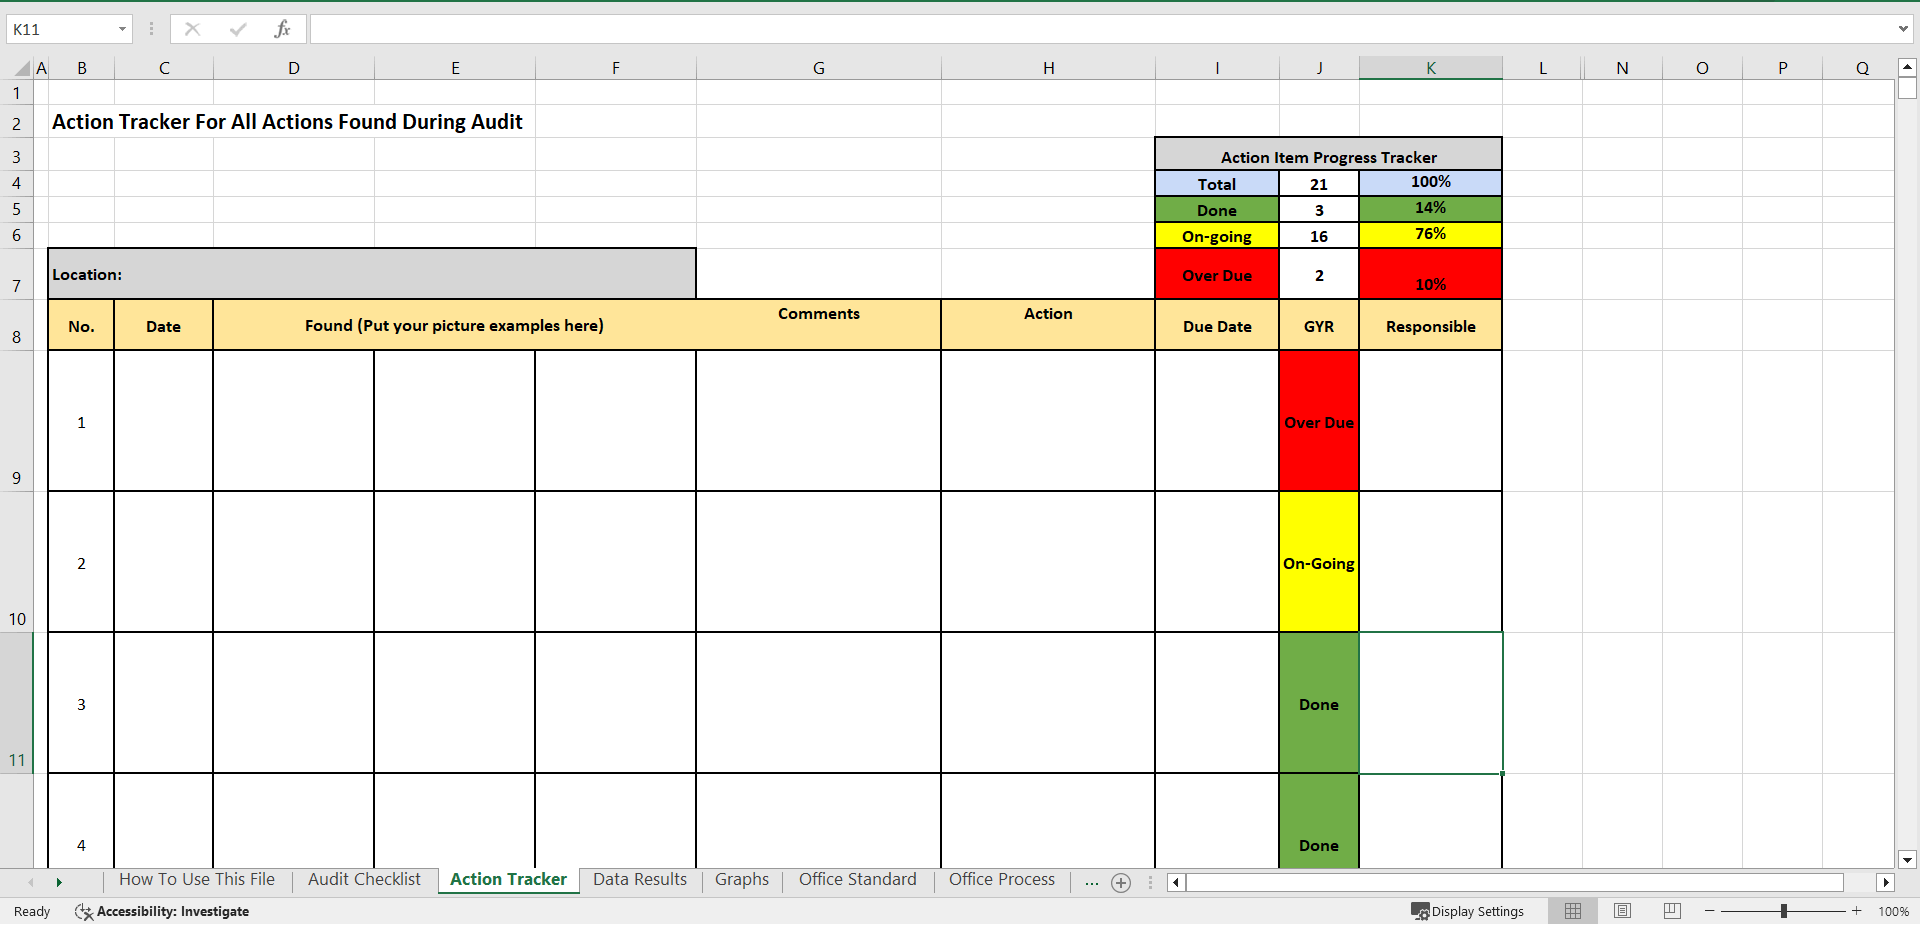 Office 5S Audit Checklist (Excel template (XLSX)) Preview Image